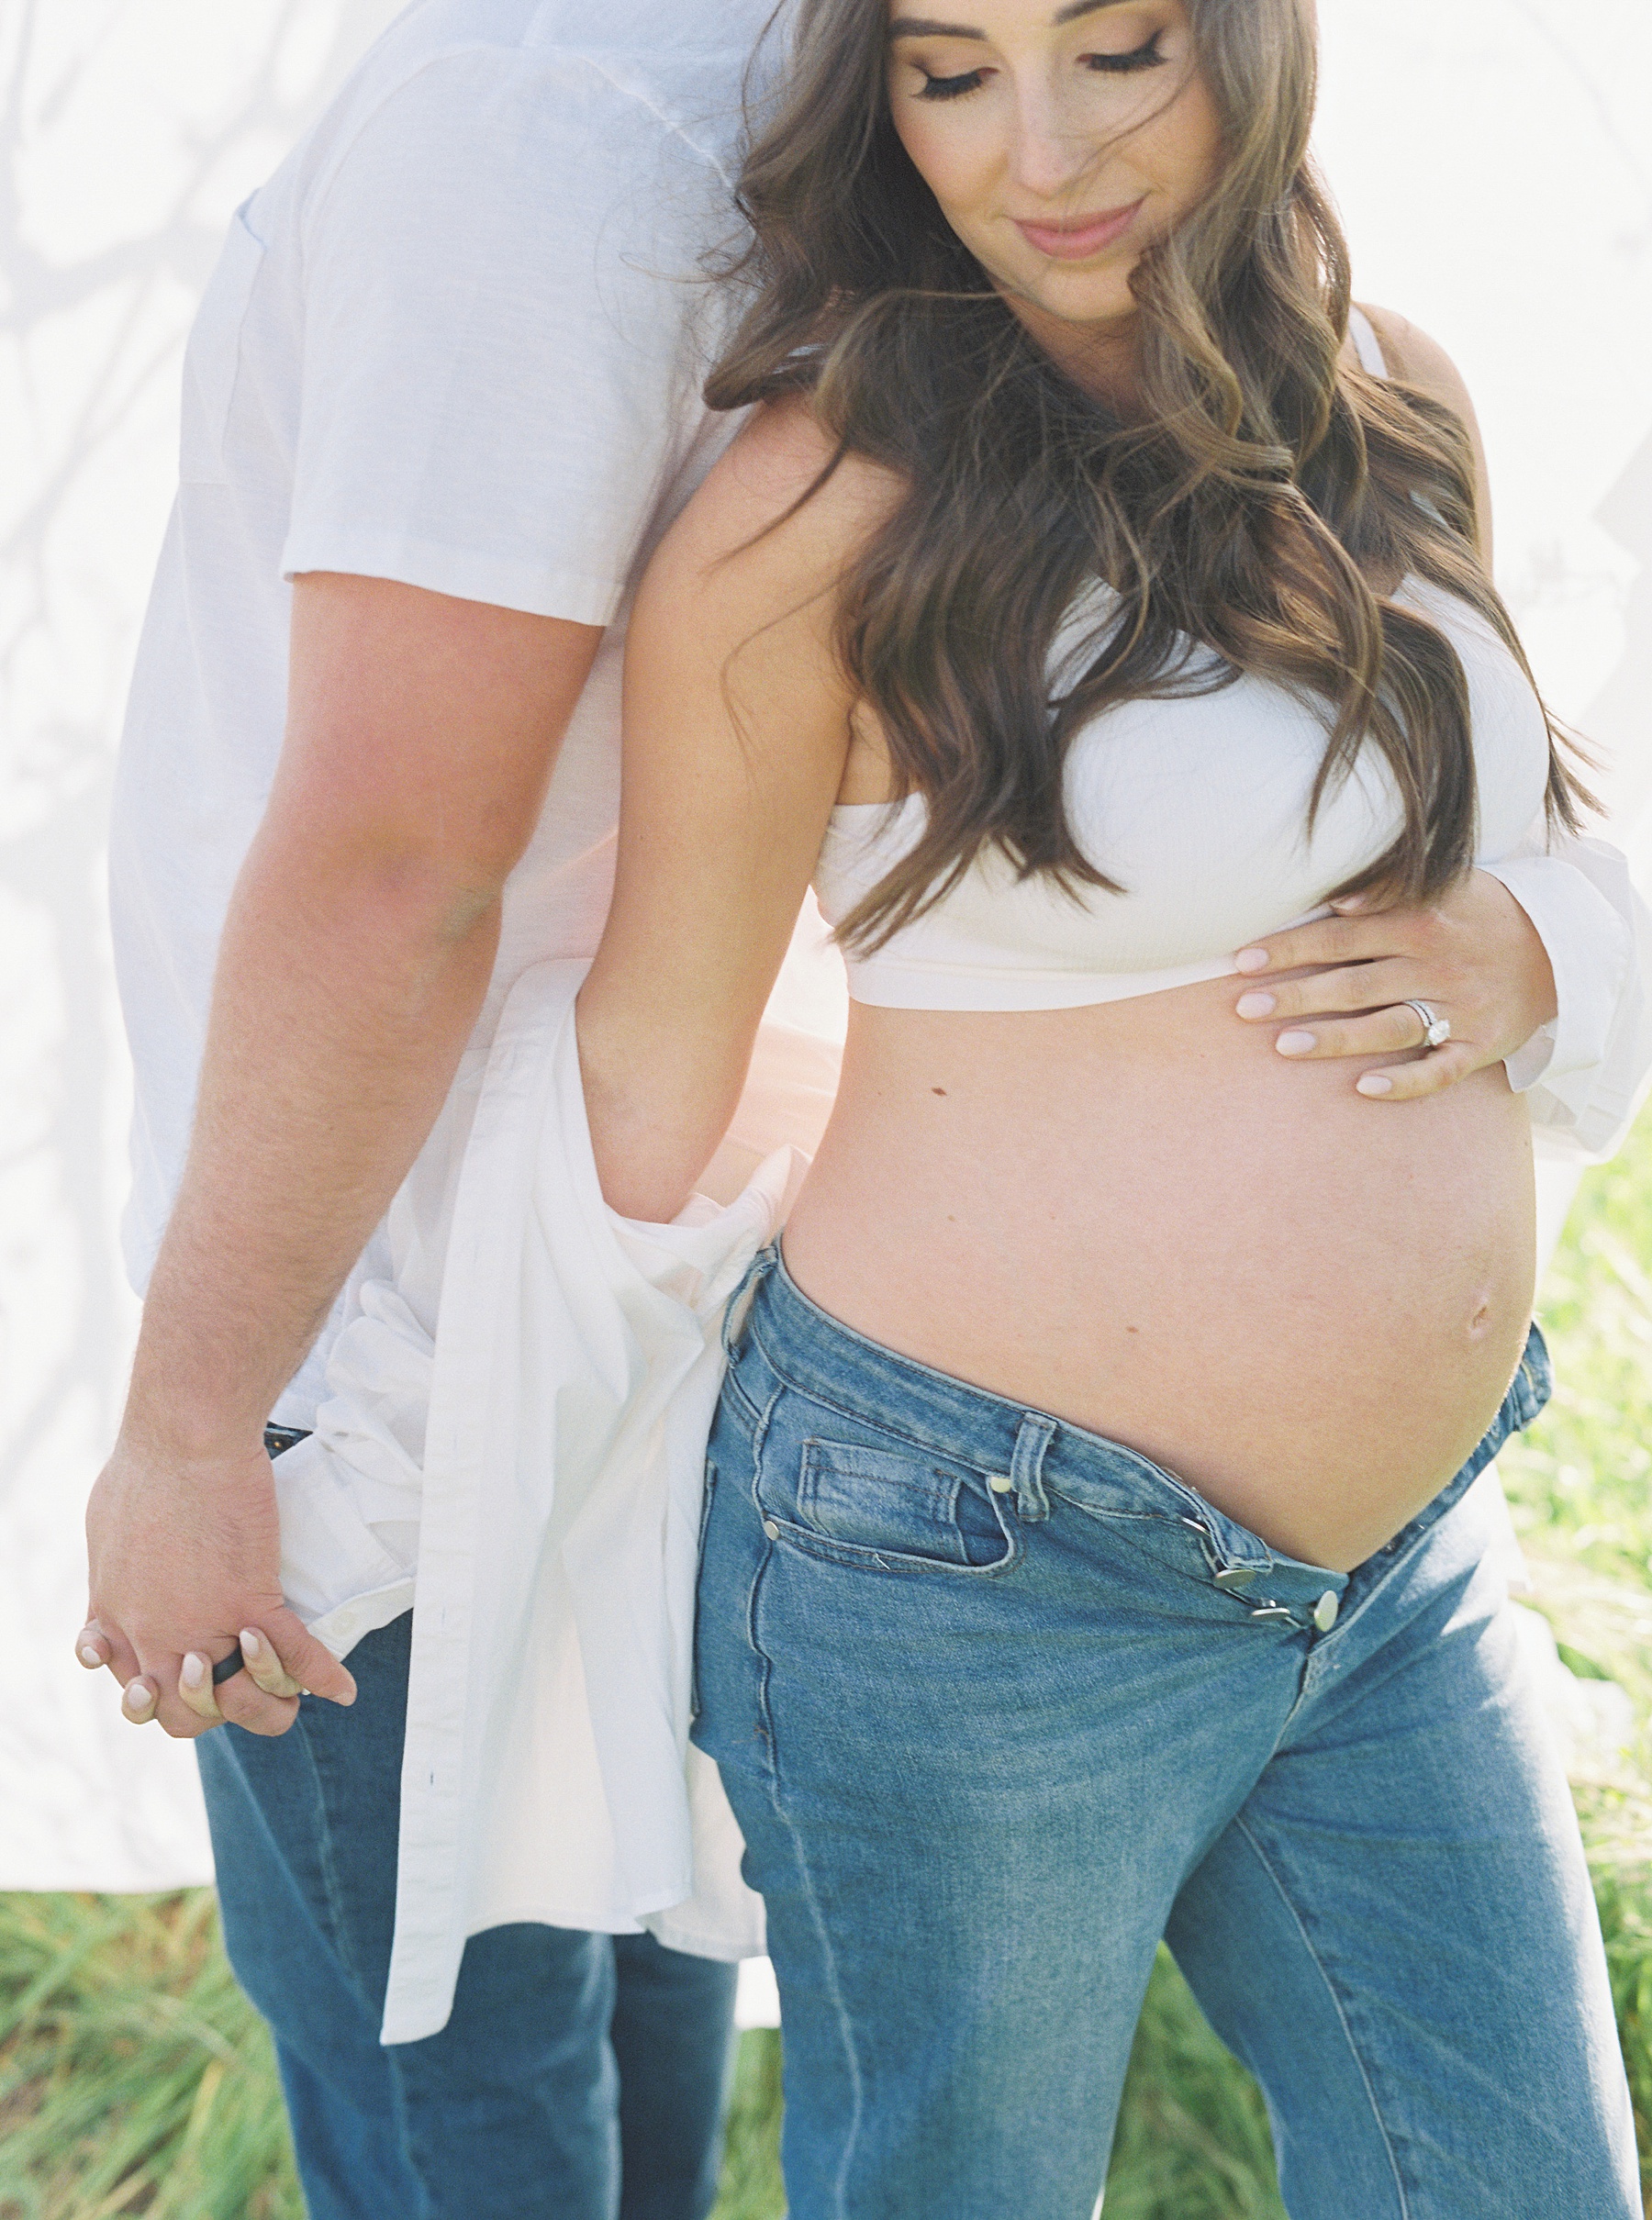 Wildflower Maternity - Folsom Maternity - Amy and Josh - Ash Baumgartner - Film Maternity Photos - Sacramento Photographer_0003.jpg